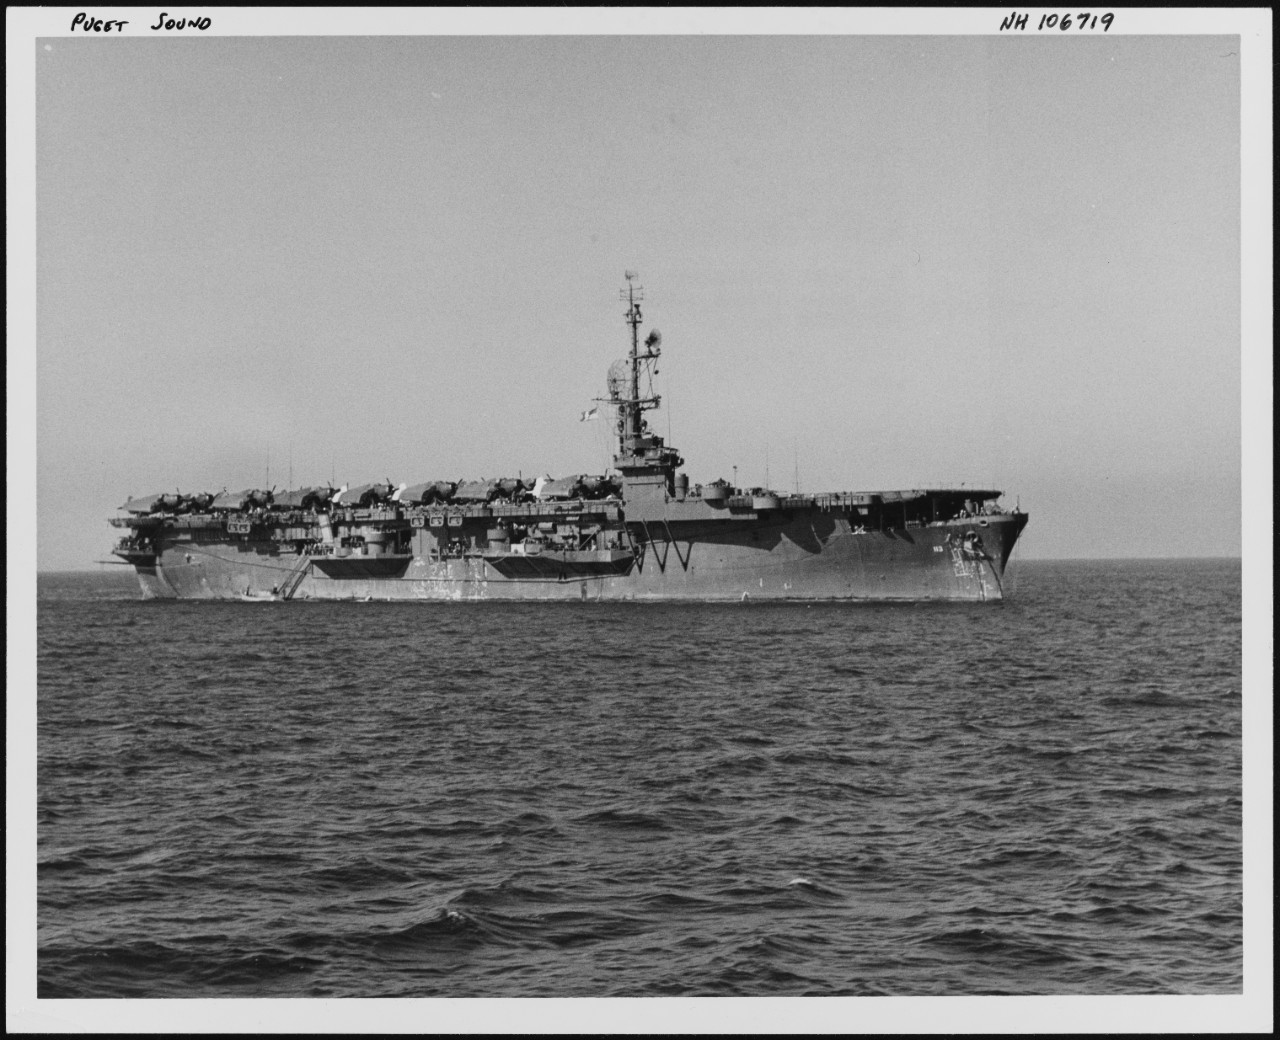 Photo # NH 106719  USS Puget Sound